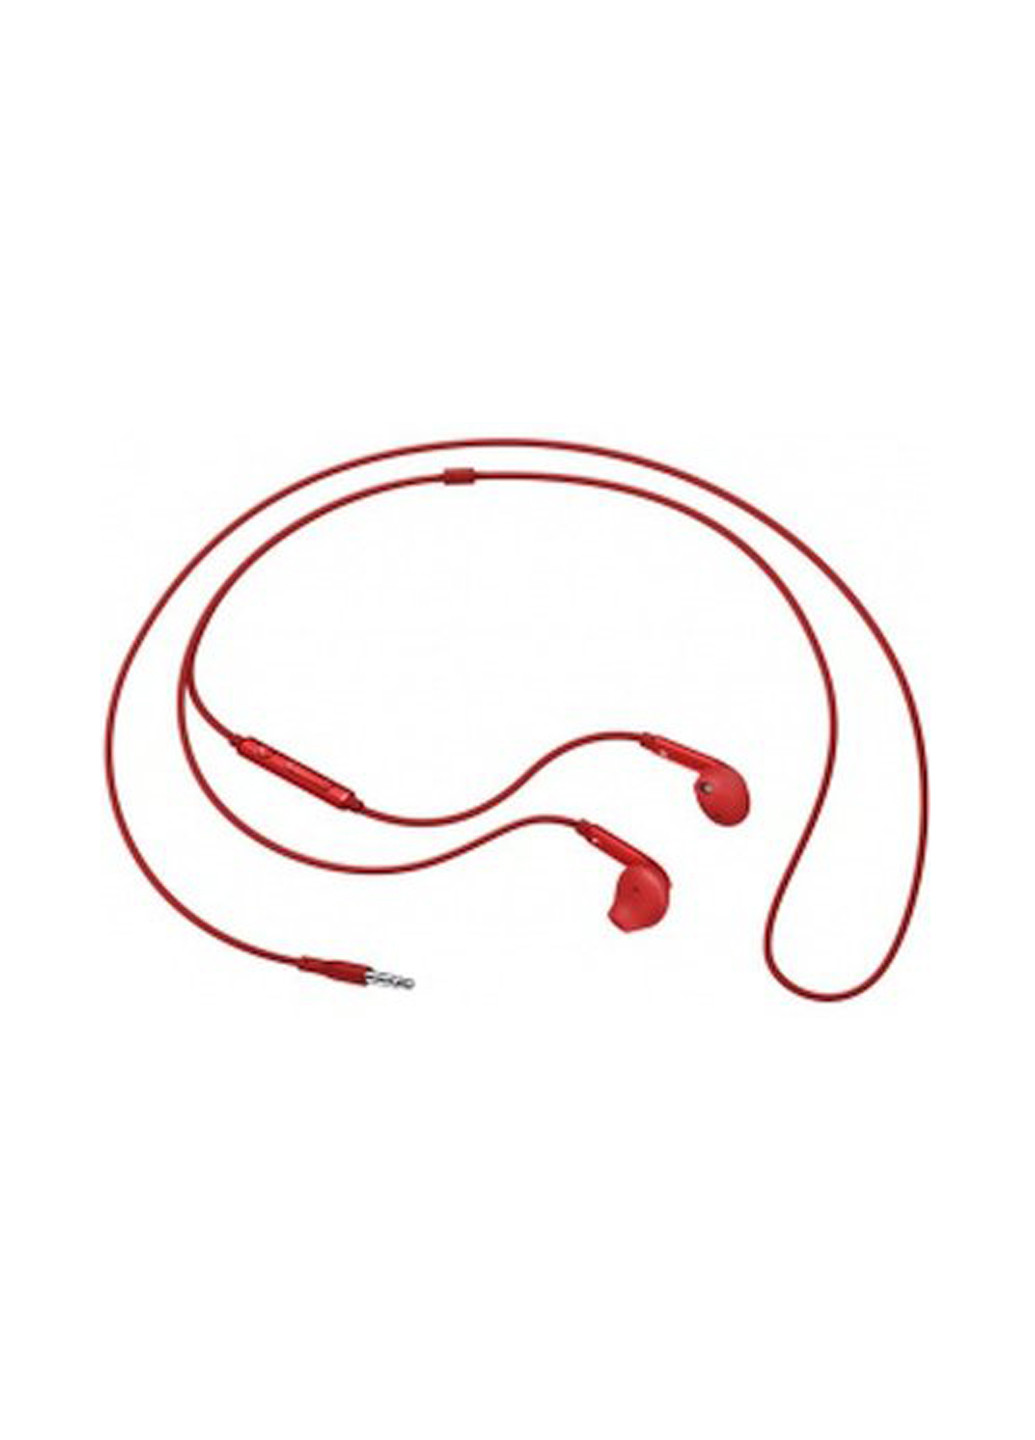 Навушники EO-EG920L Червоний Samsung eo-eg920l красный (135029016)